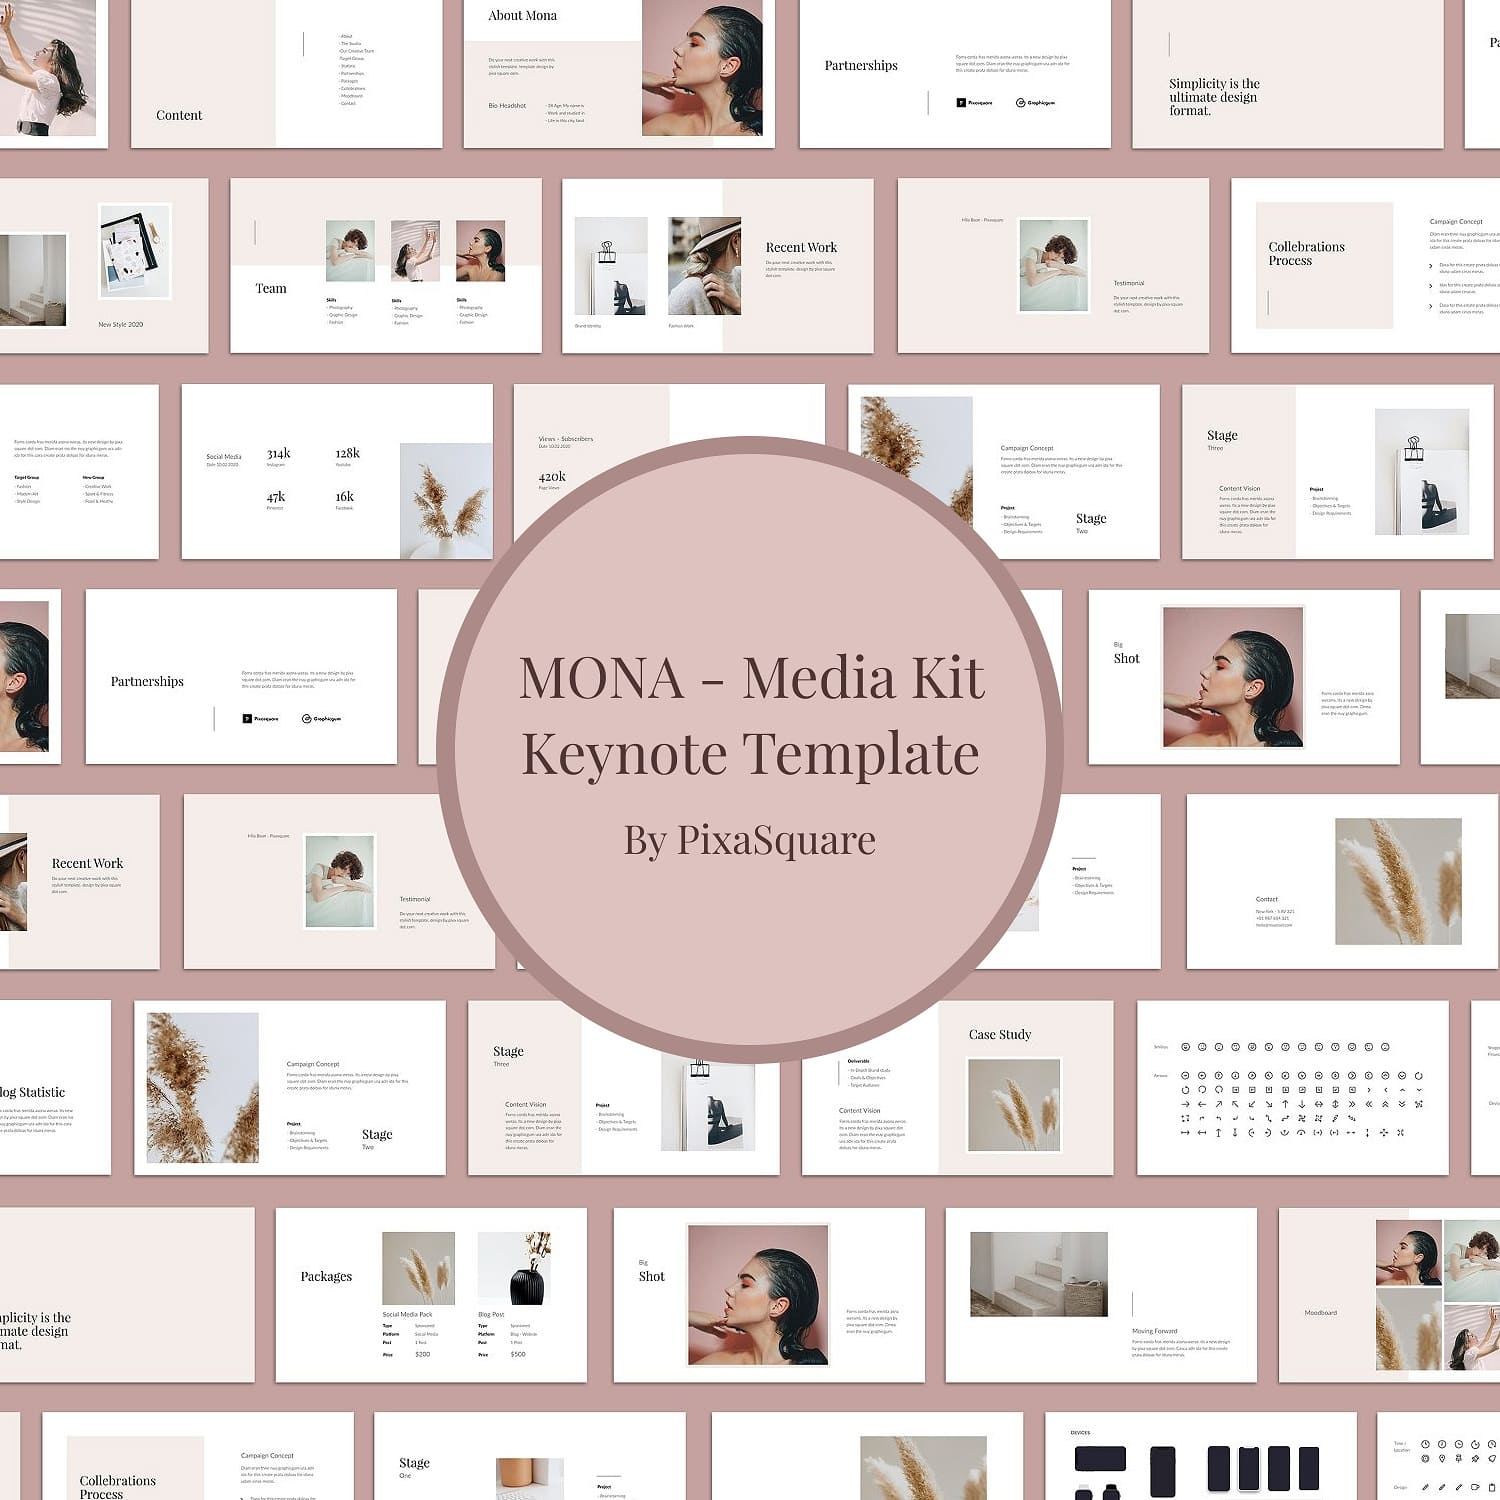 Mona media kit keynote template.